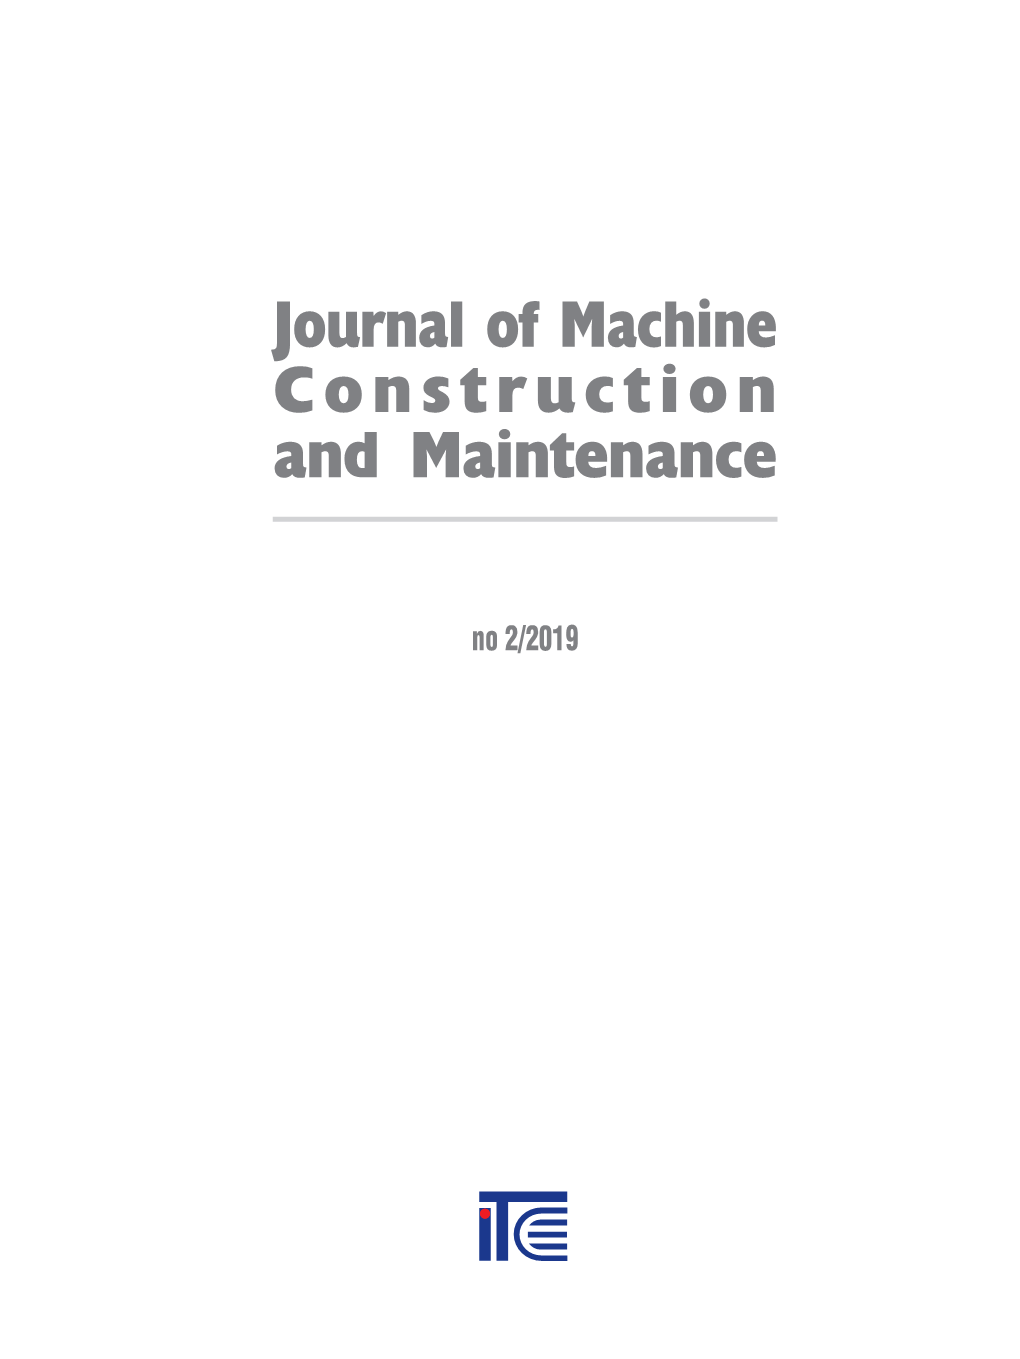 Journal of Machine Construction and Maintenance